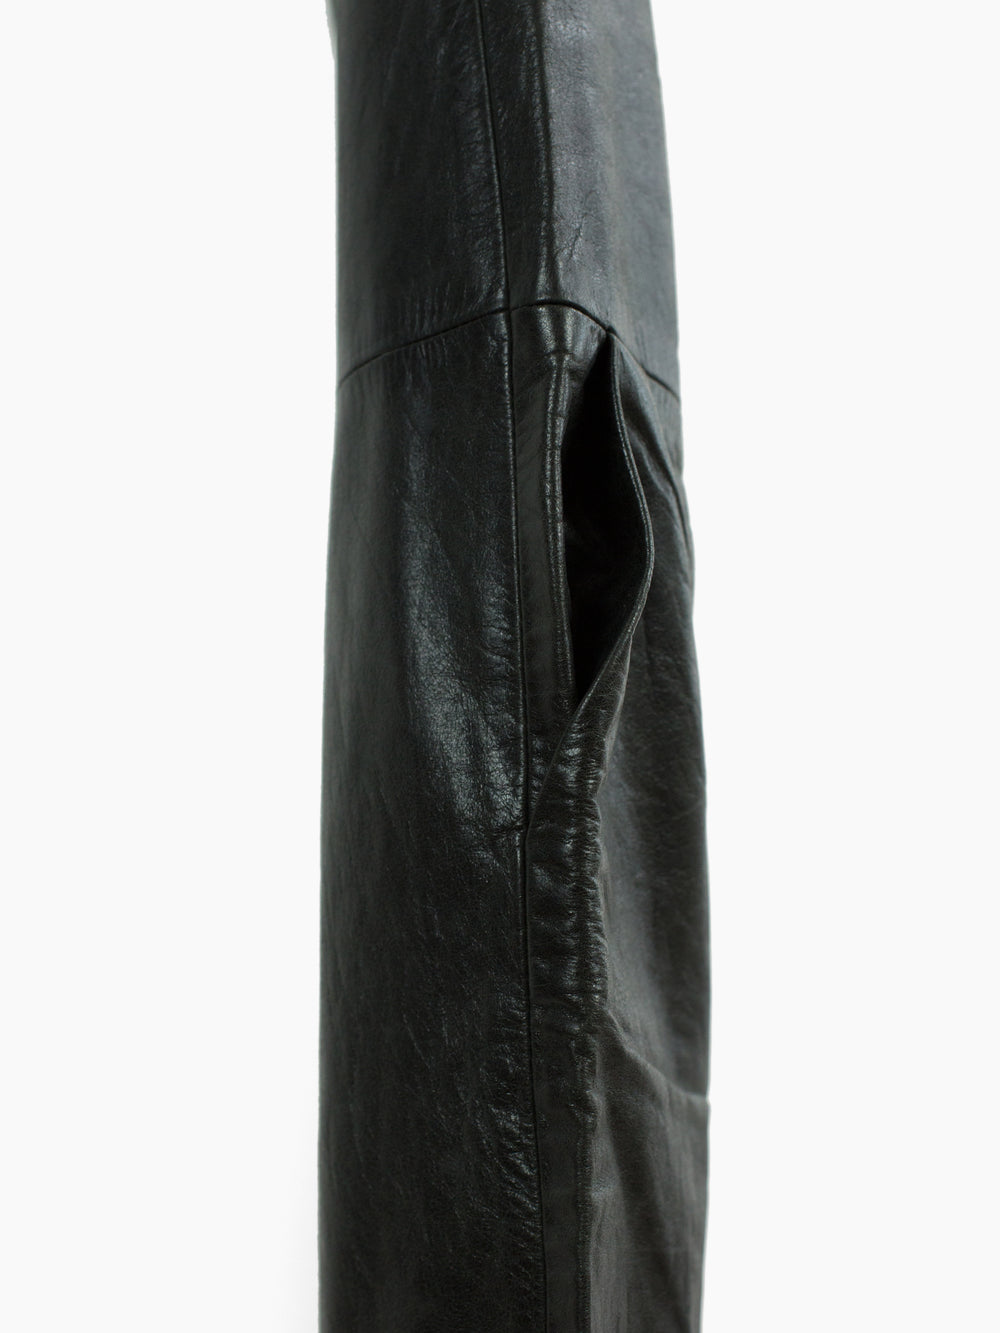 Shinichiro Arakawa 90s Pleated Leather Jean